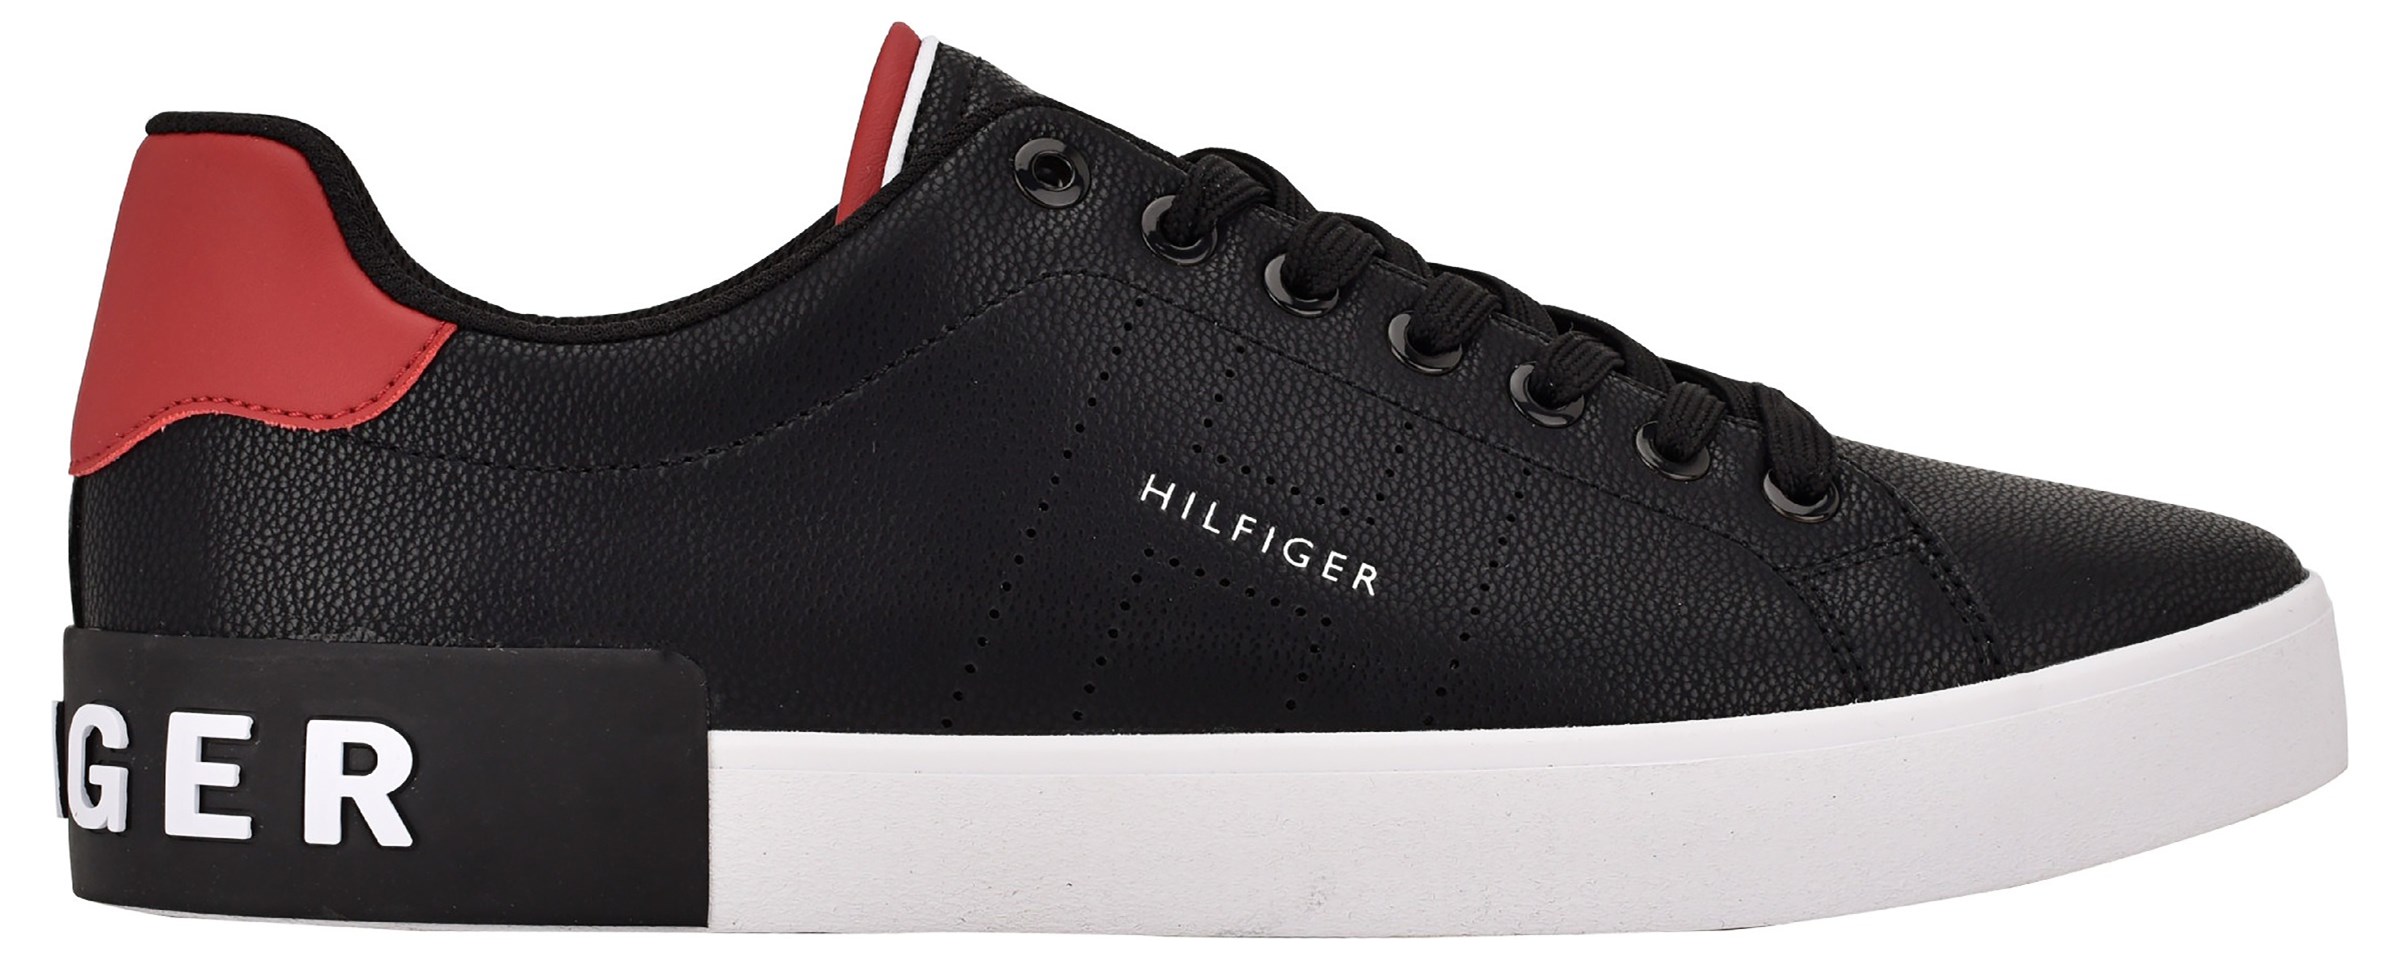  Tommy Hilfiger Men's Runder Sneaker | Fashion Sneakers